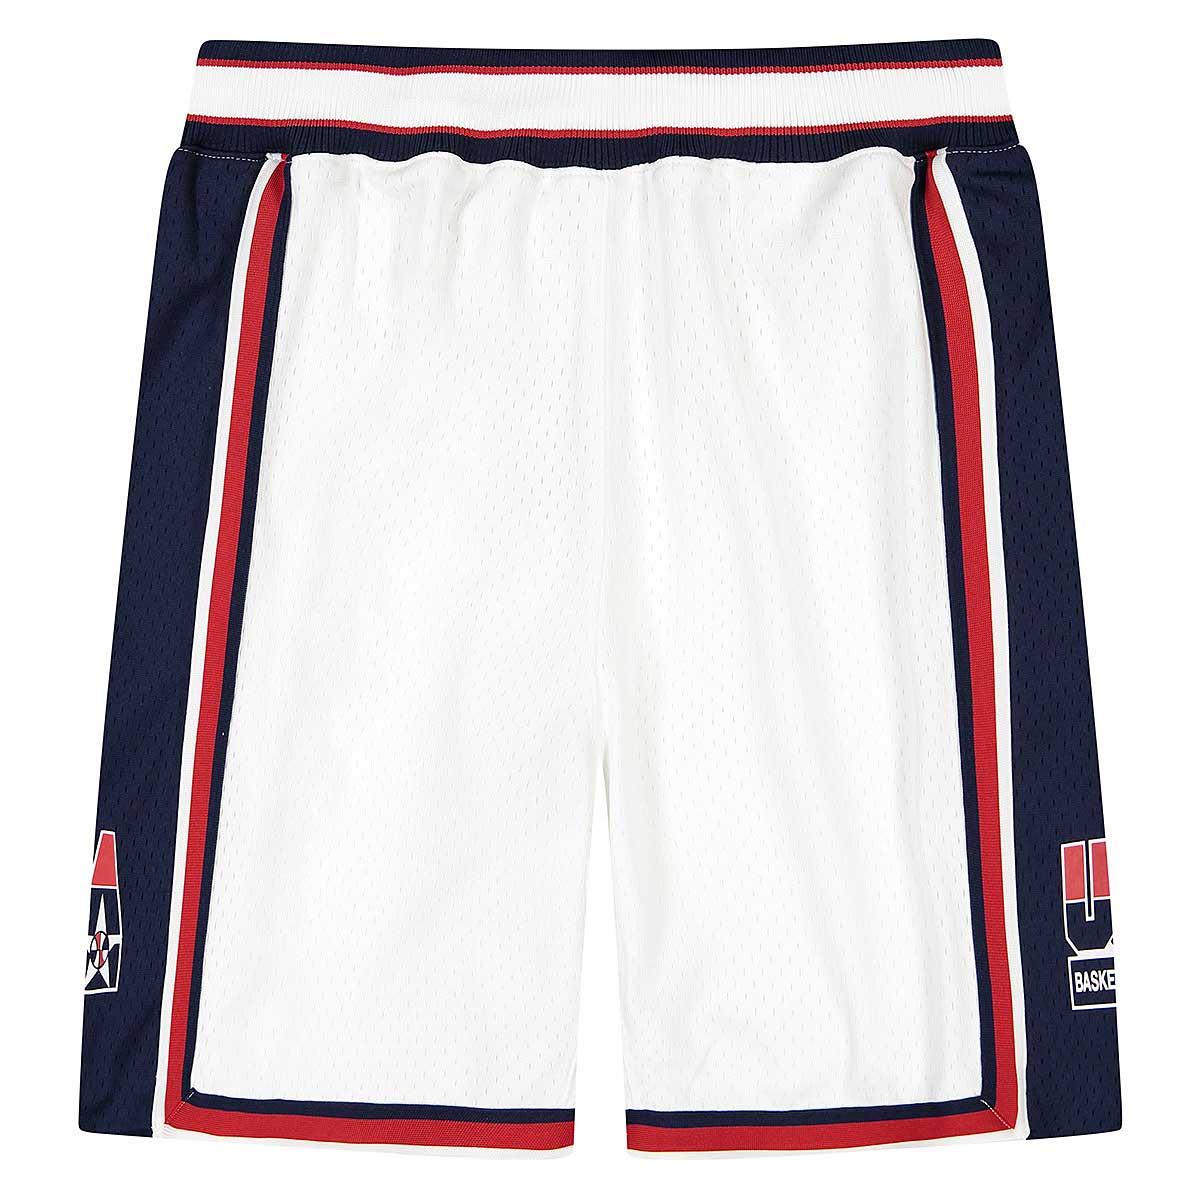 1992 USA Dream Team Basketball Shorts Pants Stitched White 